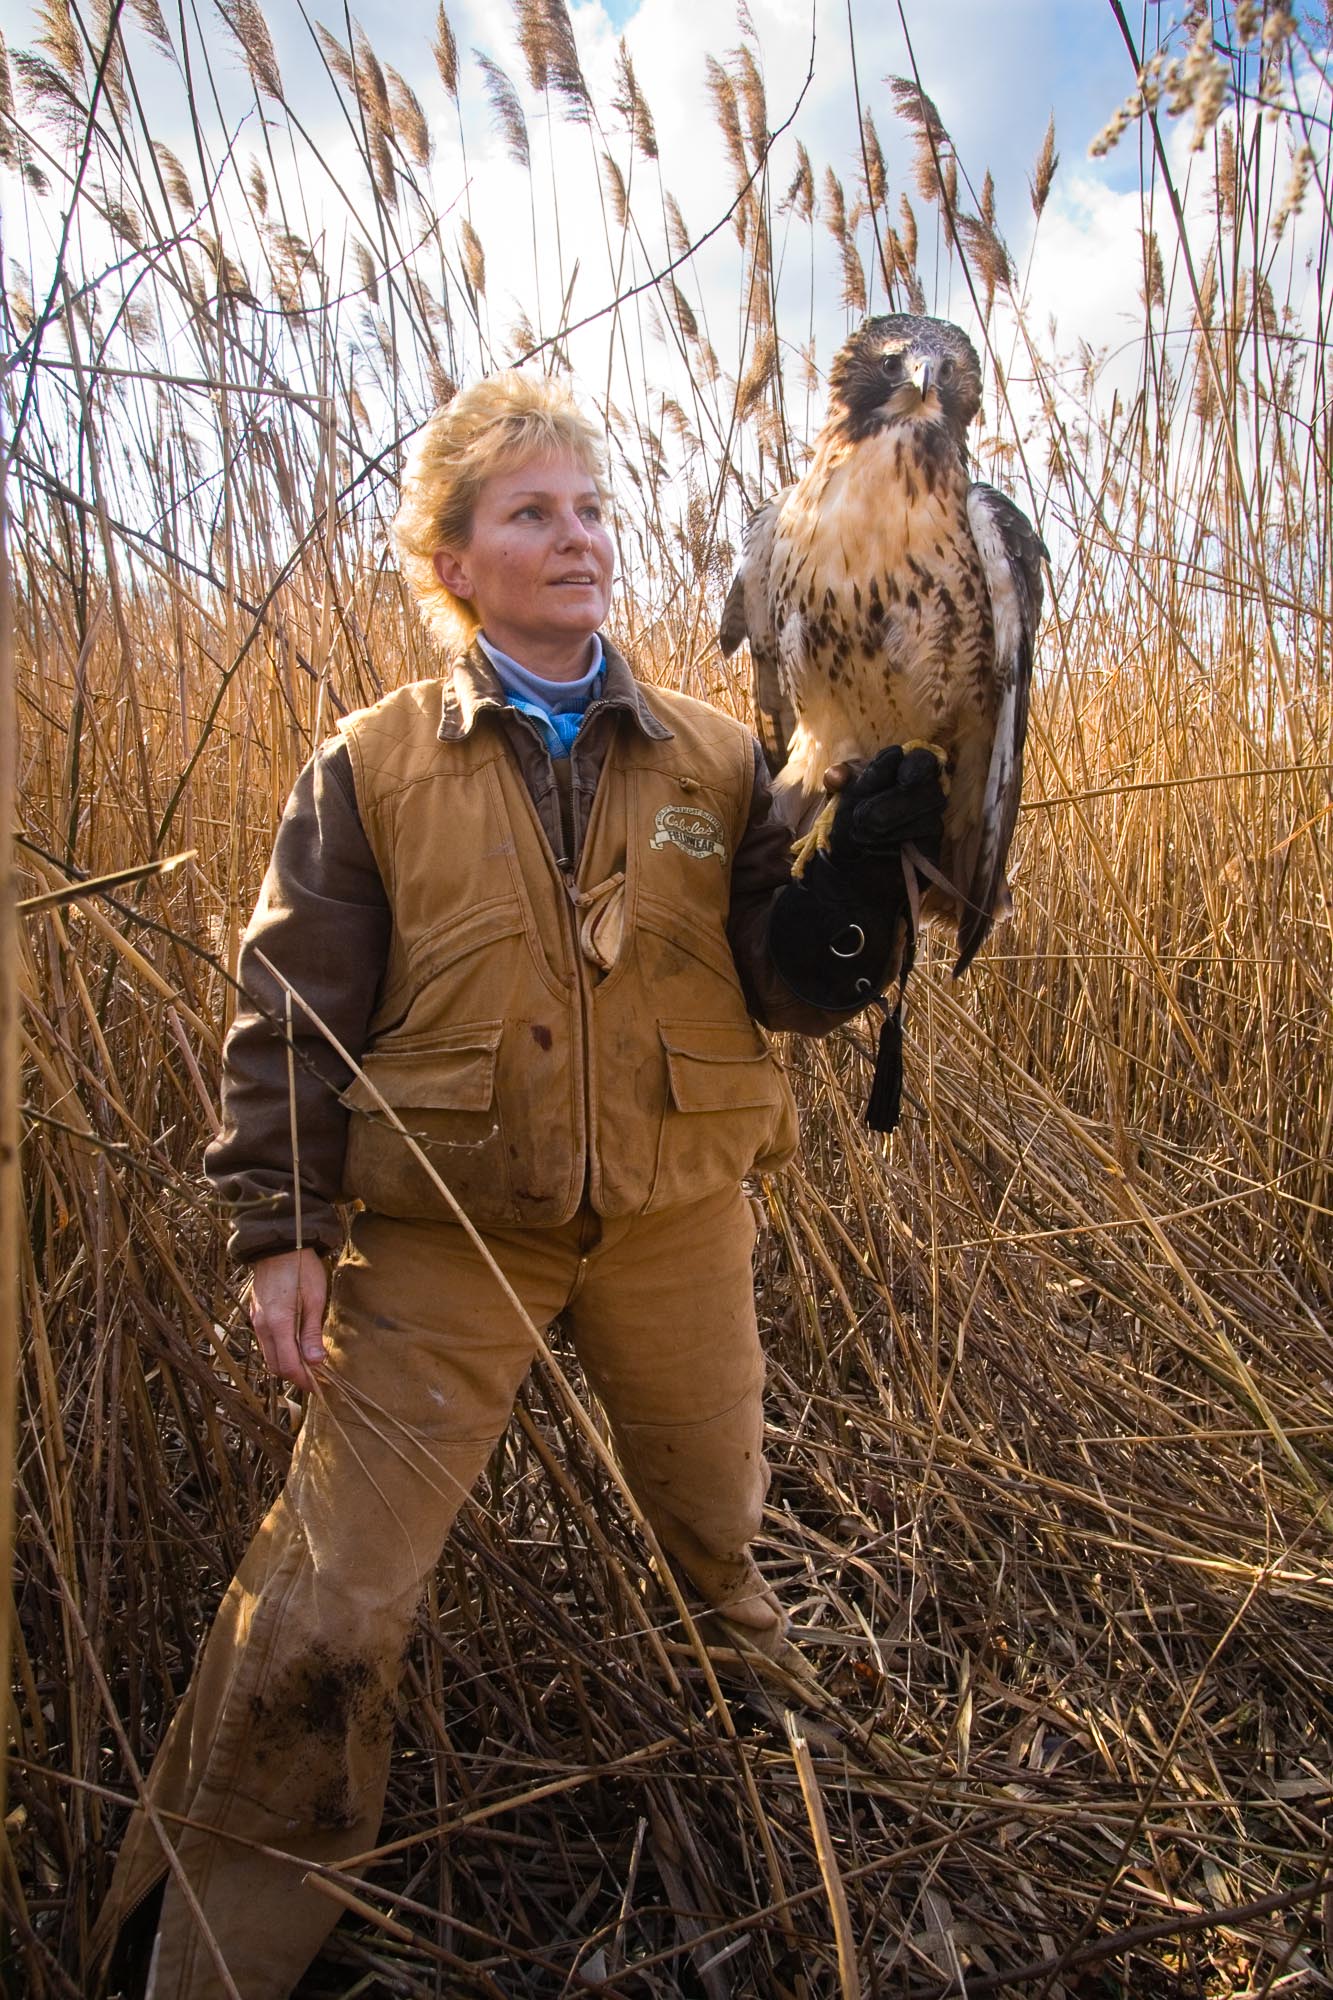 Mature Woman enjoying her outdoor hobby as a falconer